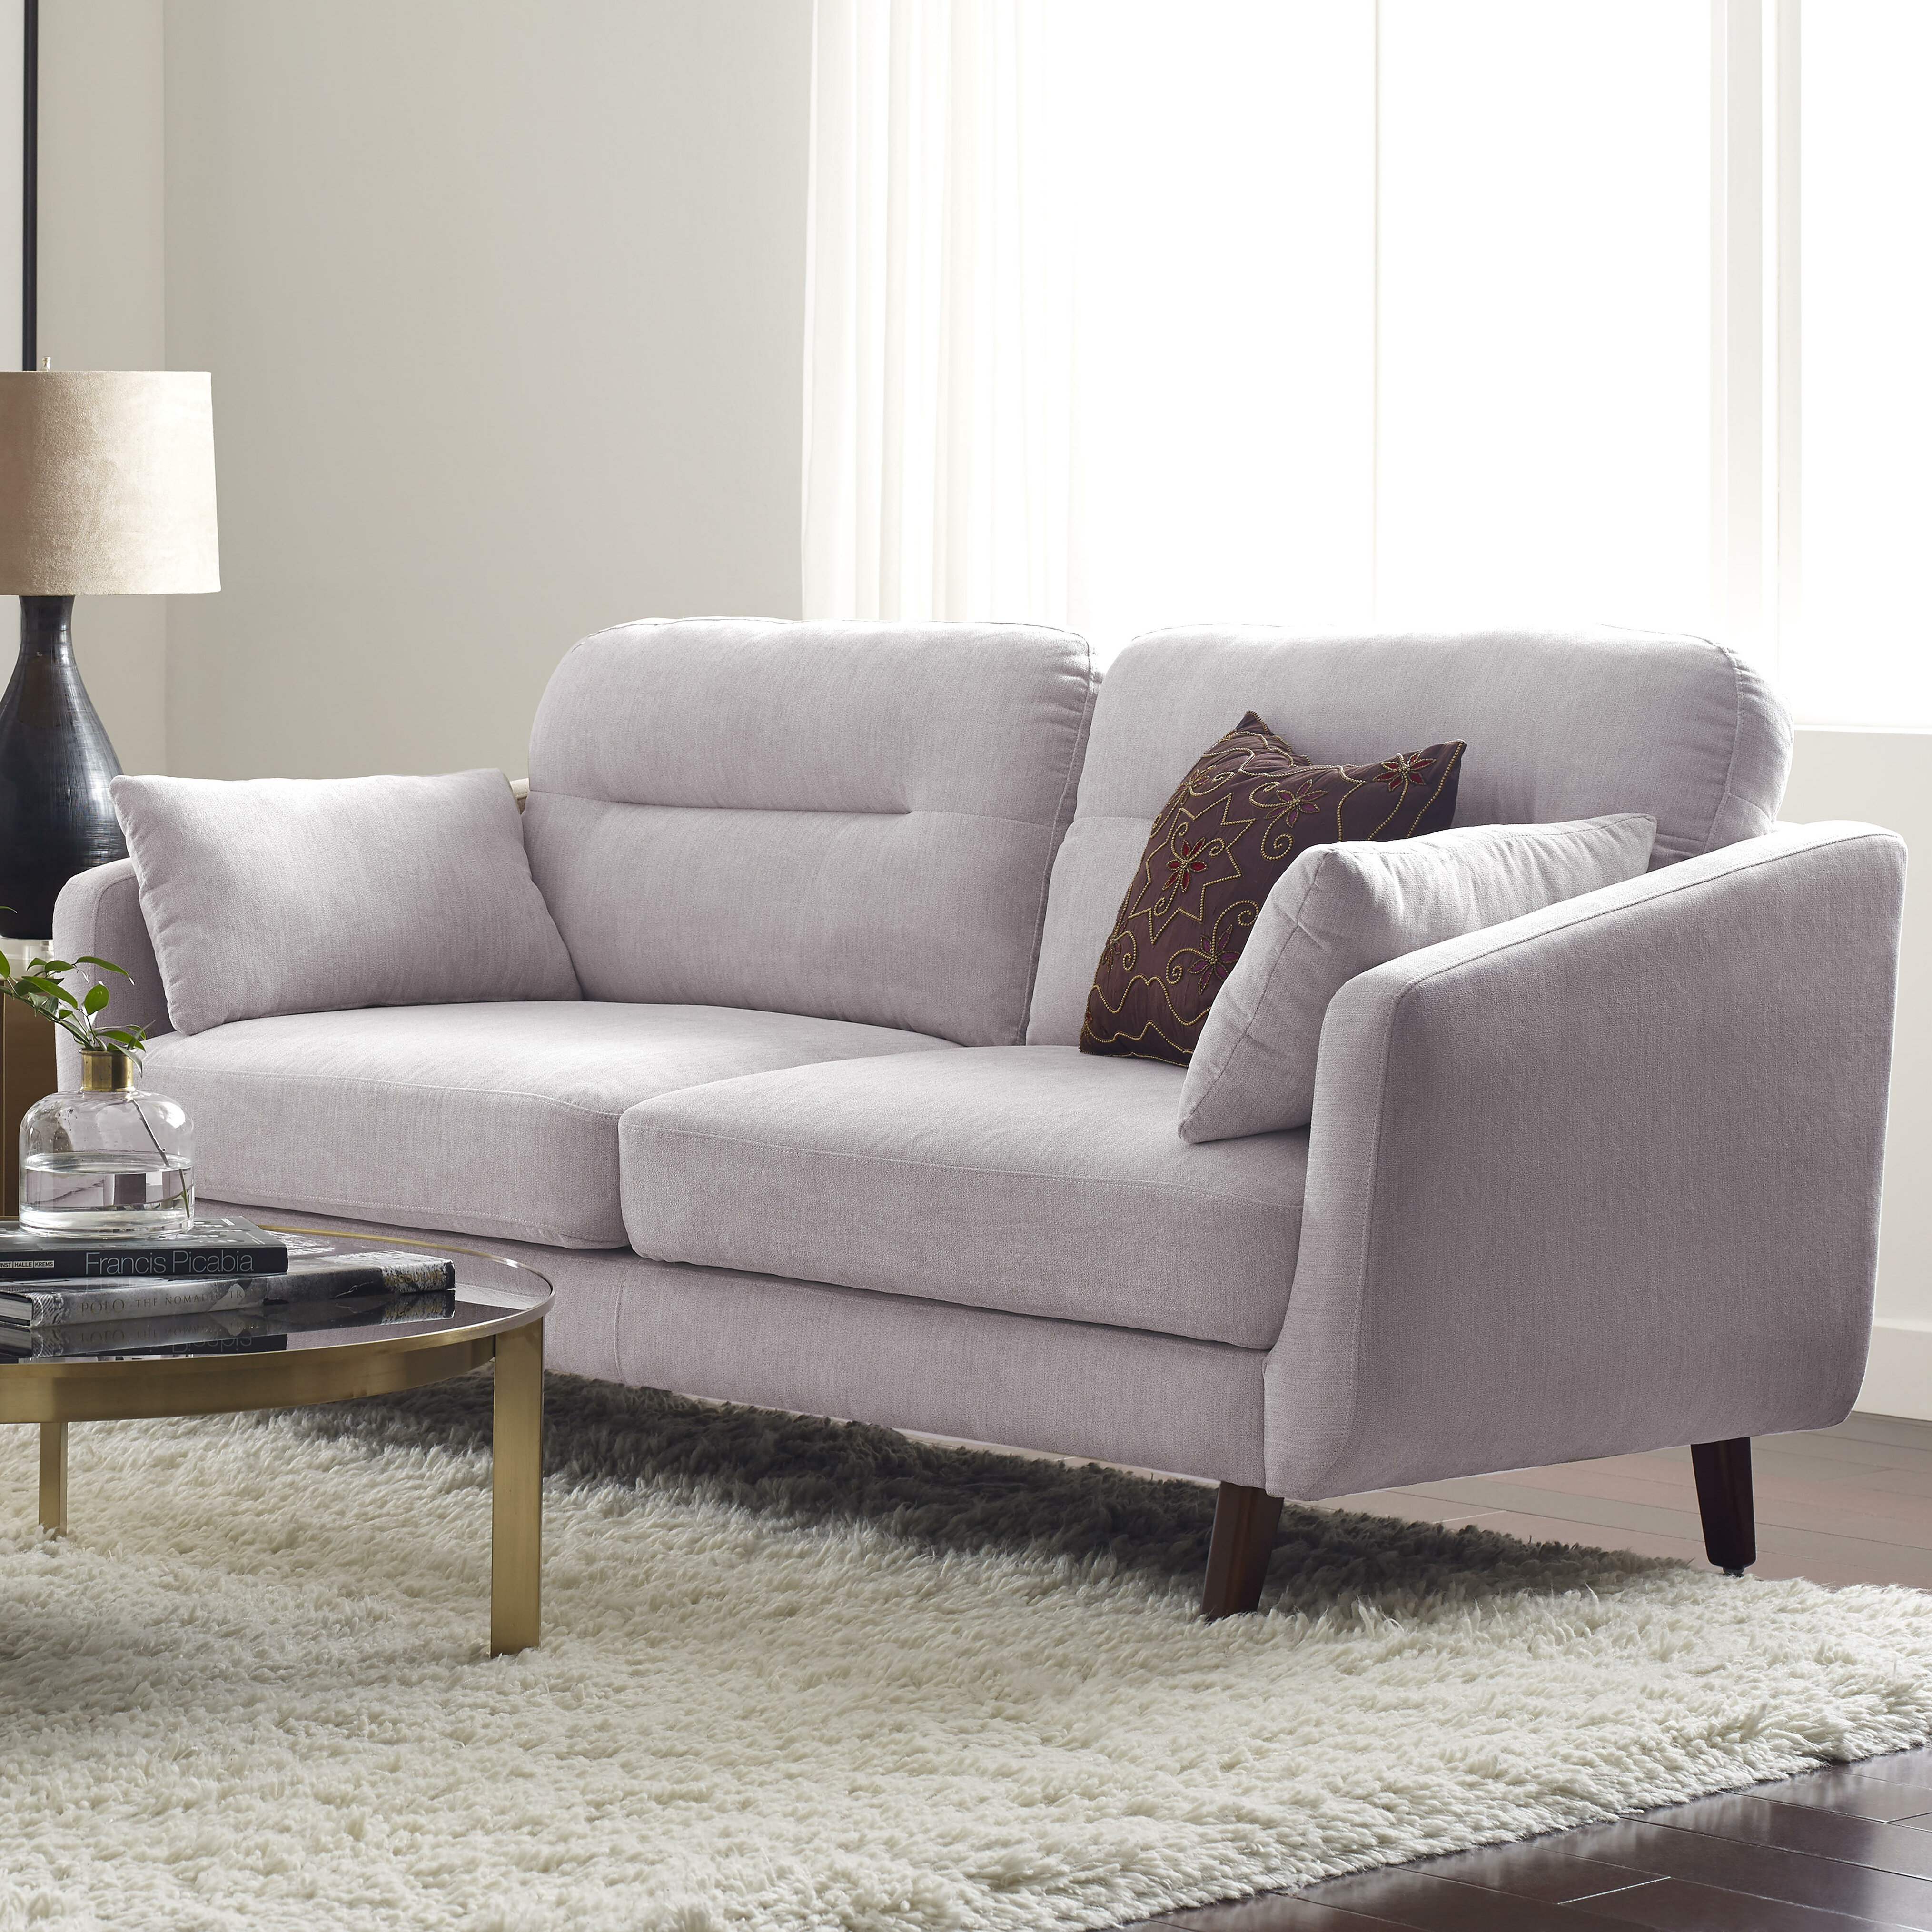 Serta At Home Savanna Configurable Living Room Set Reviews Wayfair